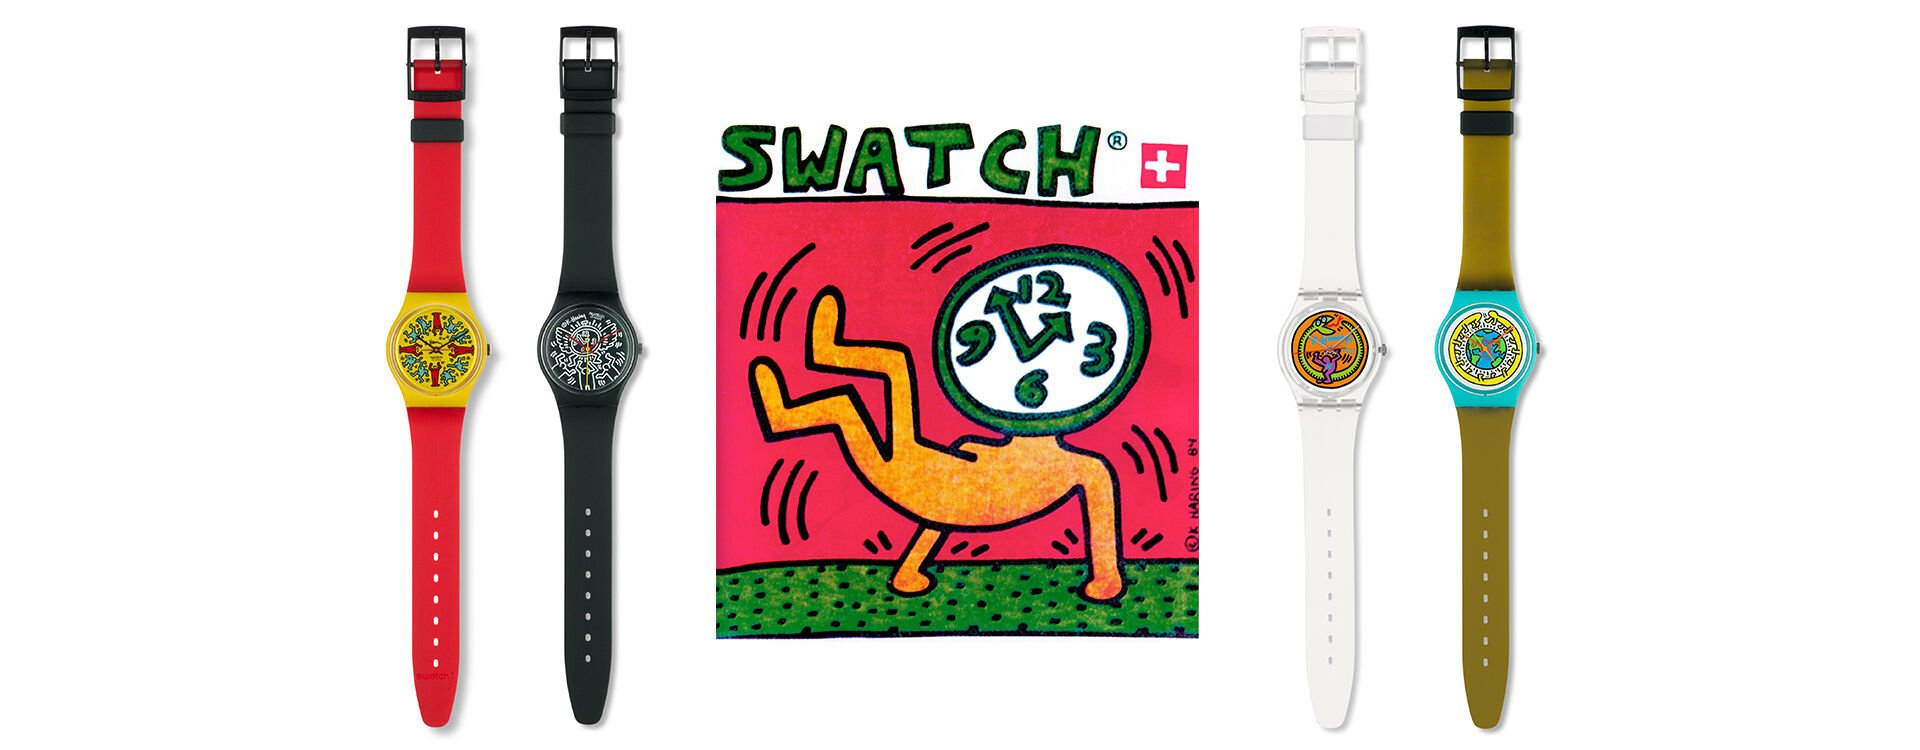 Dream Apple Watch Fashion Collaborations